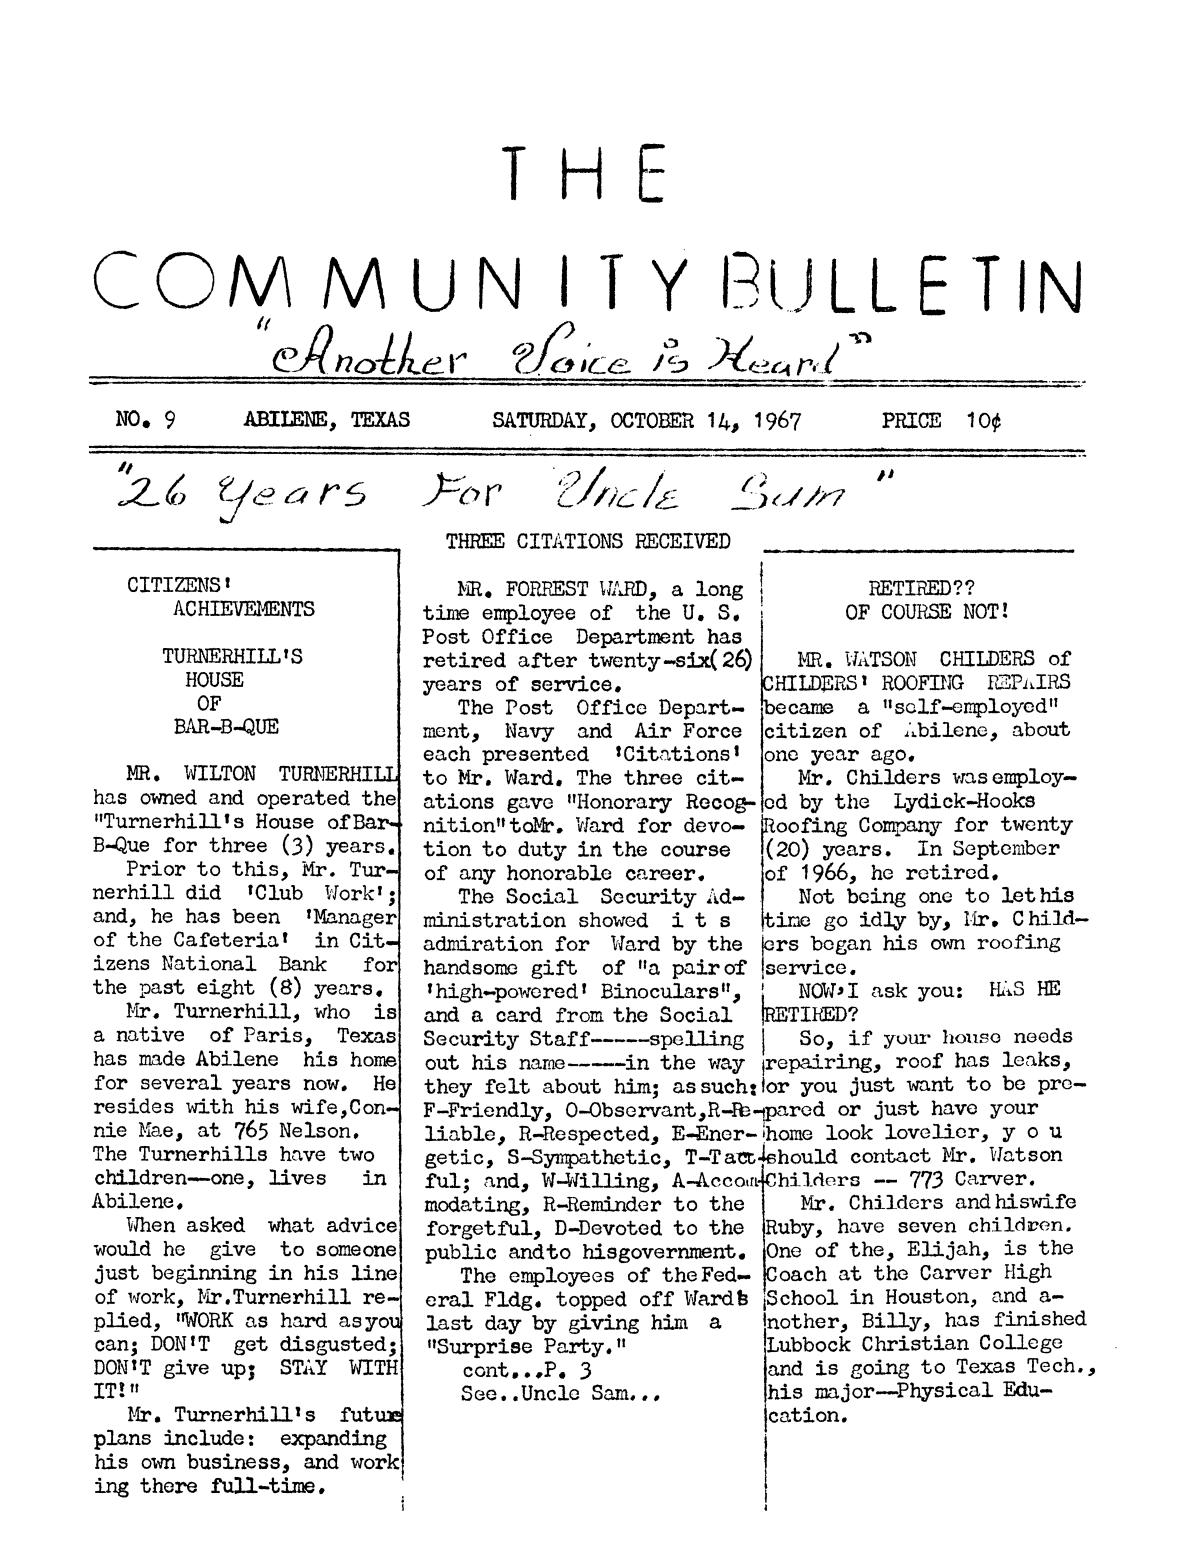 The Community Bulletin (Abilene, Texas), No. 9, Saturday, October 14, 1967
                                                
                                                    1
                                                